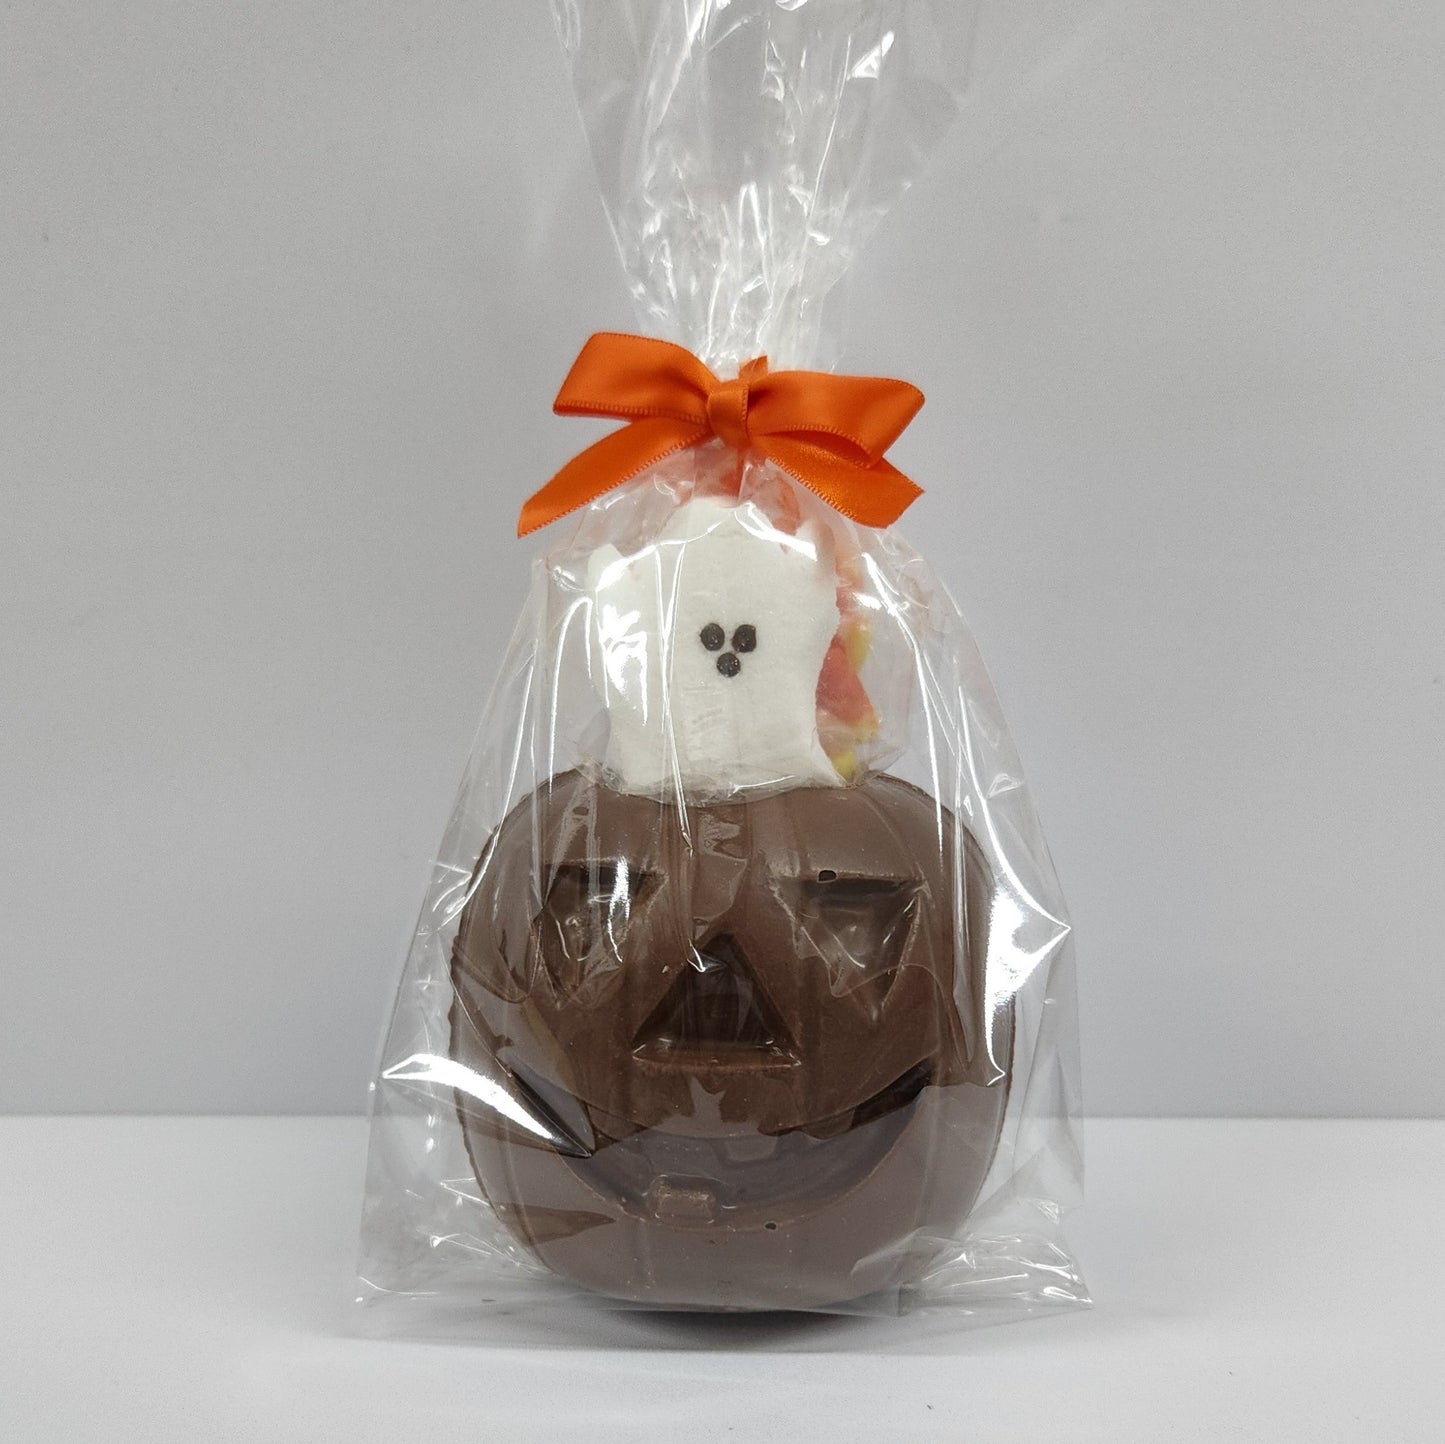 Dark Chocolate 3D Pumpkin with Orange Taffy, Candy Corn and a Ghost Peep inside. 